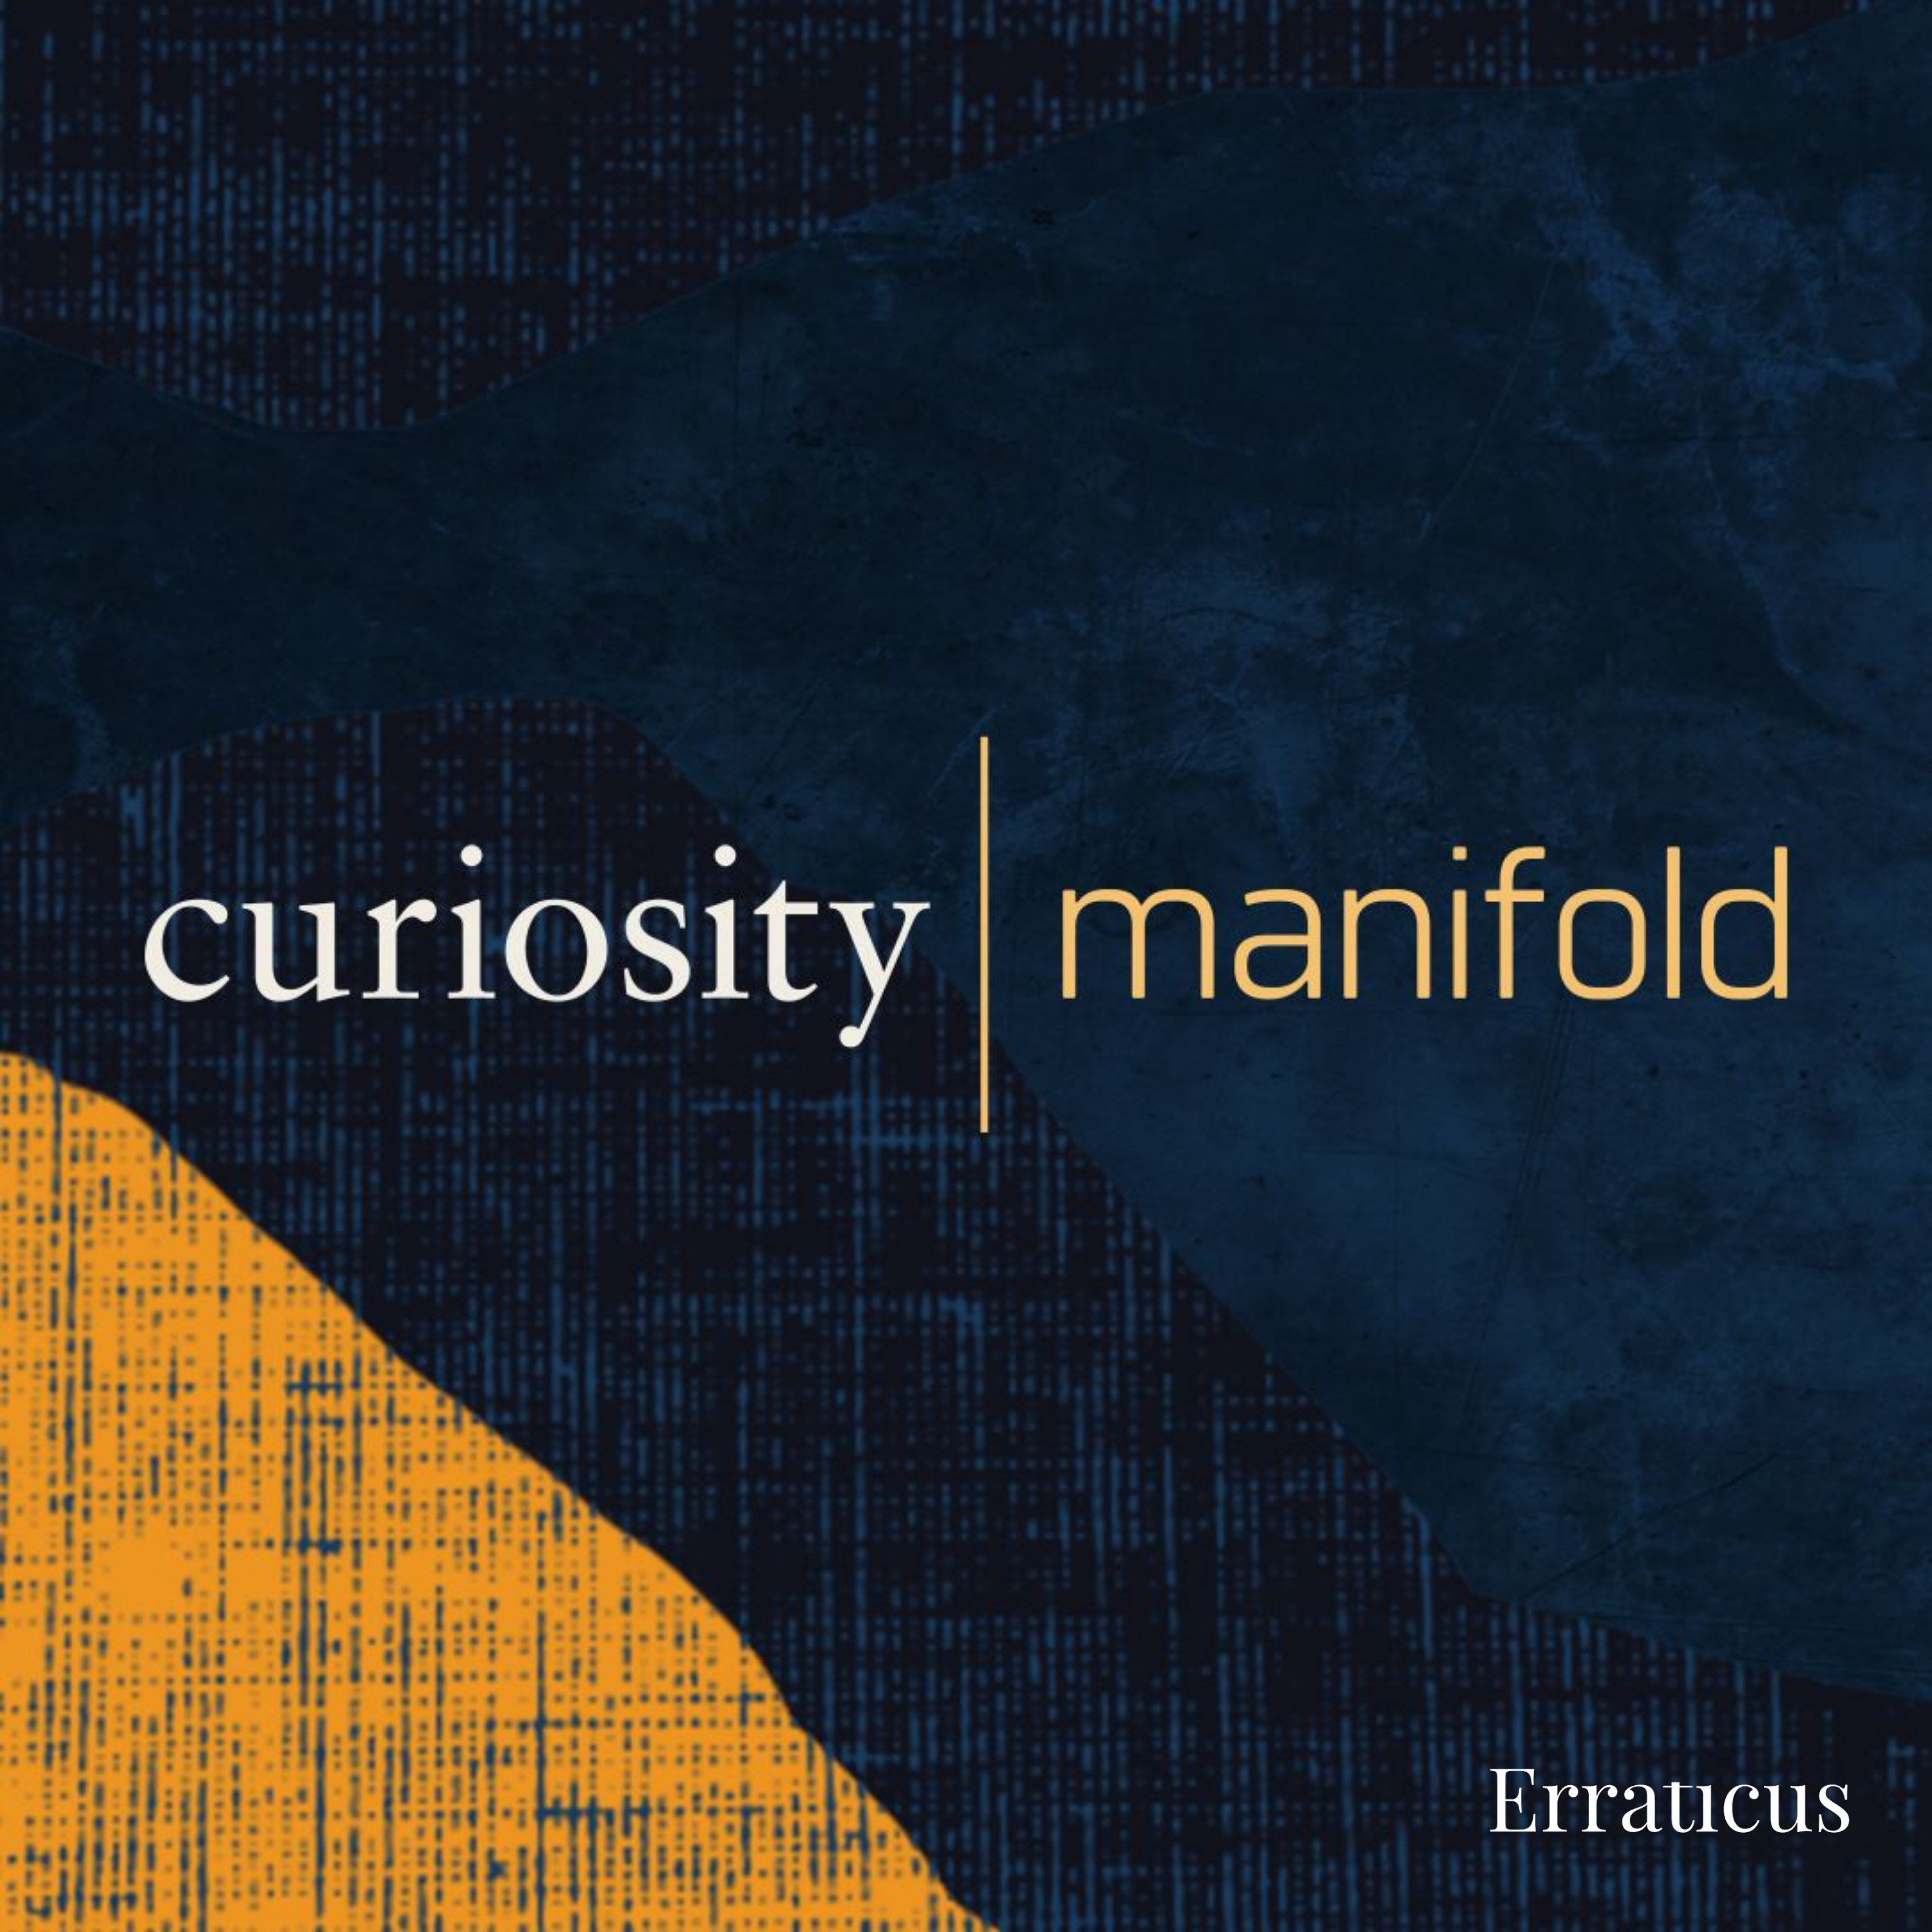 Curiosity Manifold podcast logo, produced by Erraticus